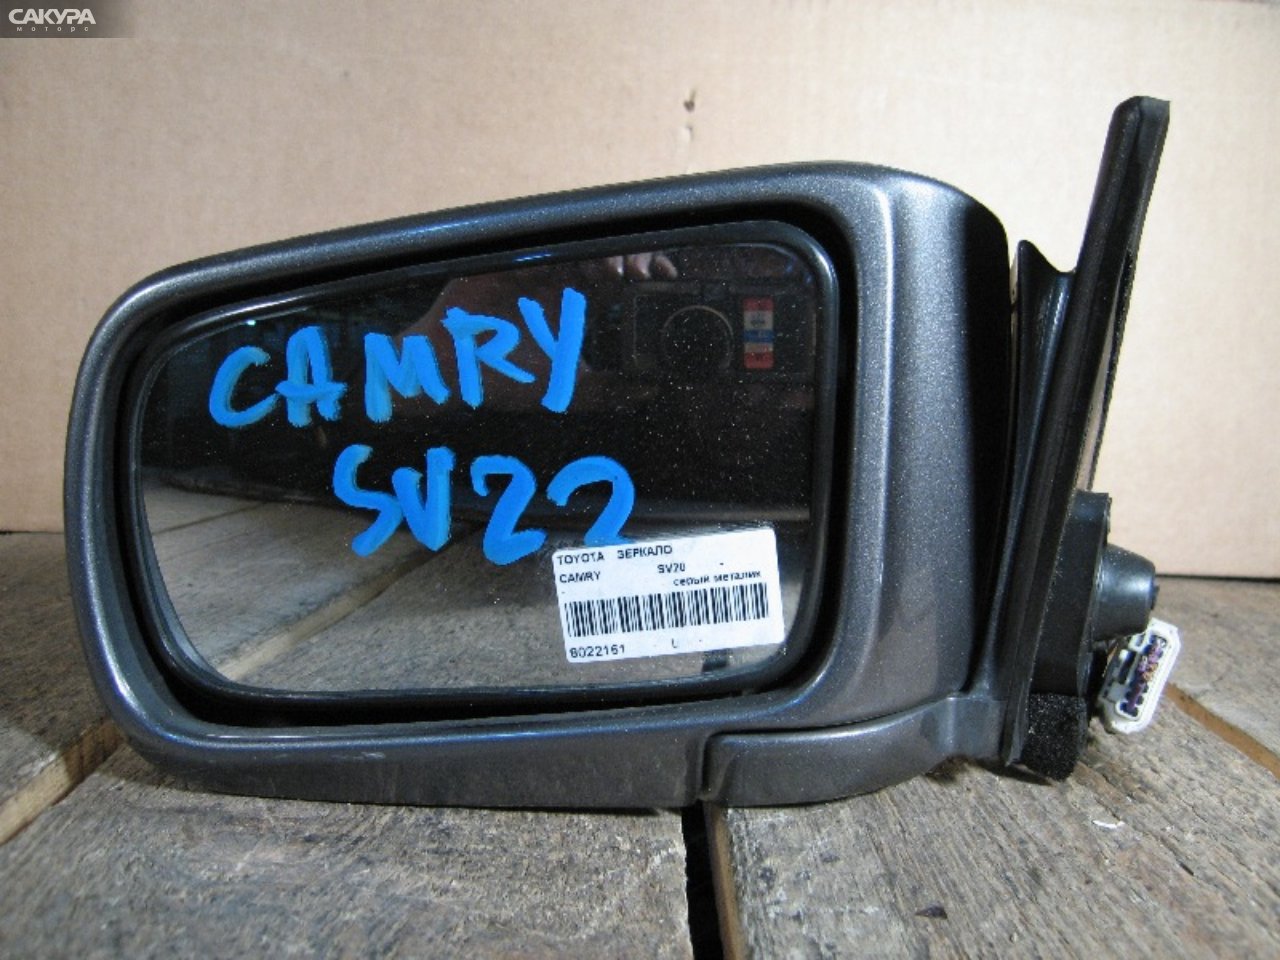 Зеркало боковое левое Toyota Camry SV20: купить в Сакура Абакан.